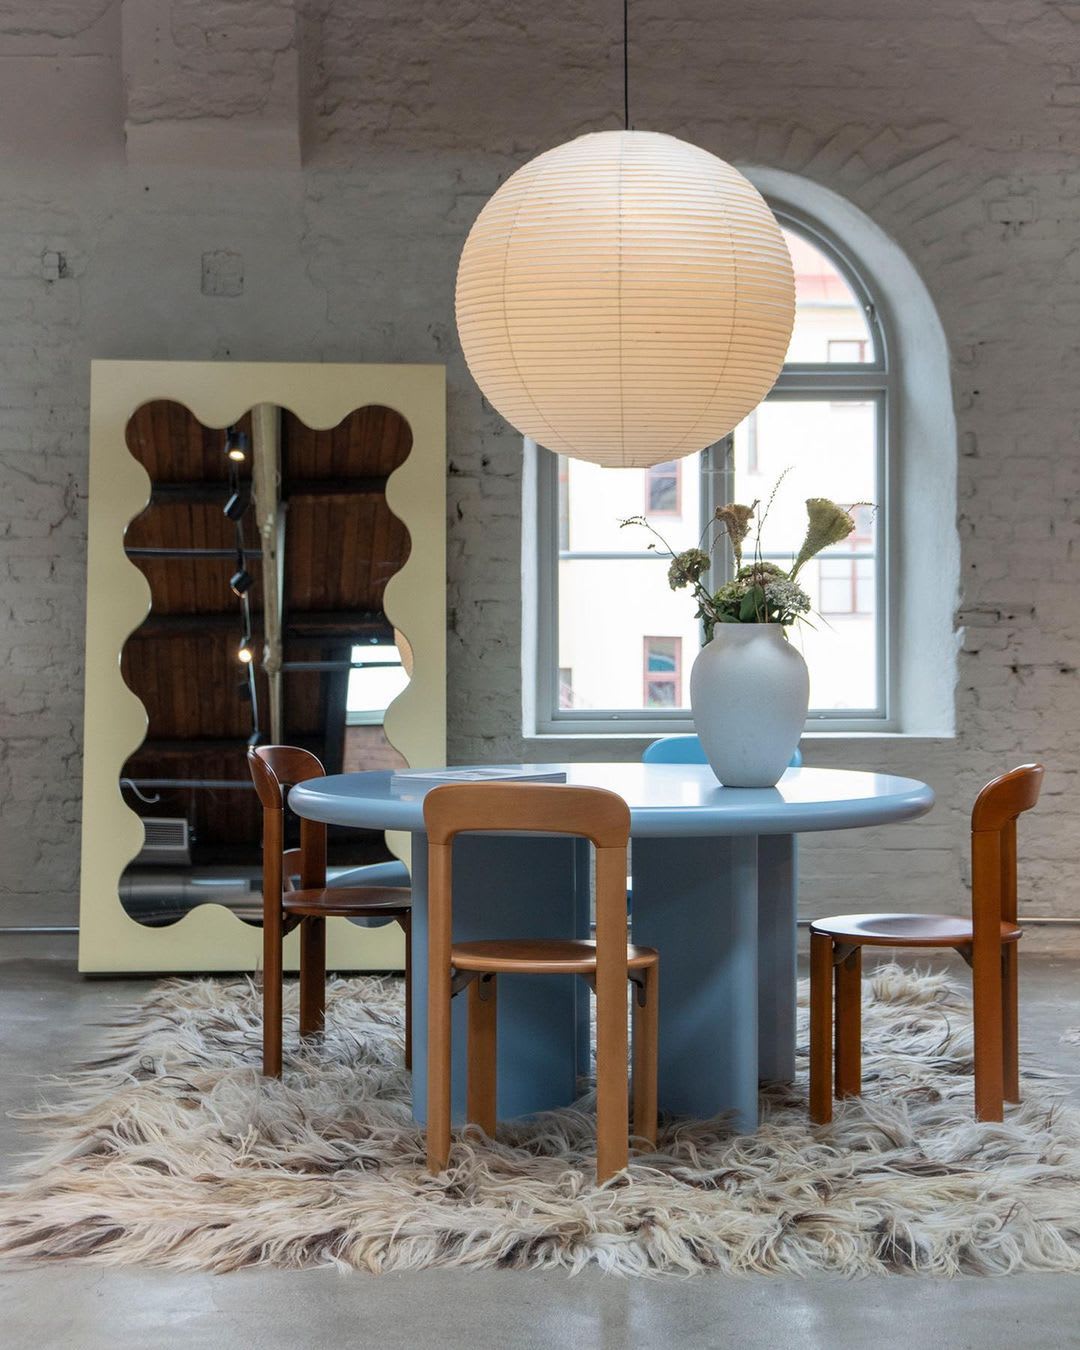 Artilleriet Interiors on Instagram: “Introducing a New Artilleriet Exclusive: Gustaf Westman Objects. Working in Sweden with Swedish woodworkers, @gustafwestman’s wavy designs…”